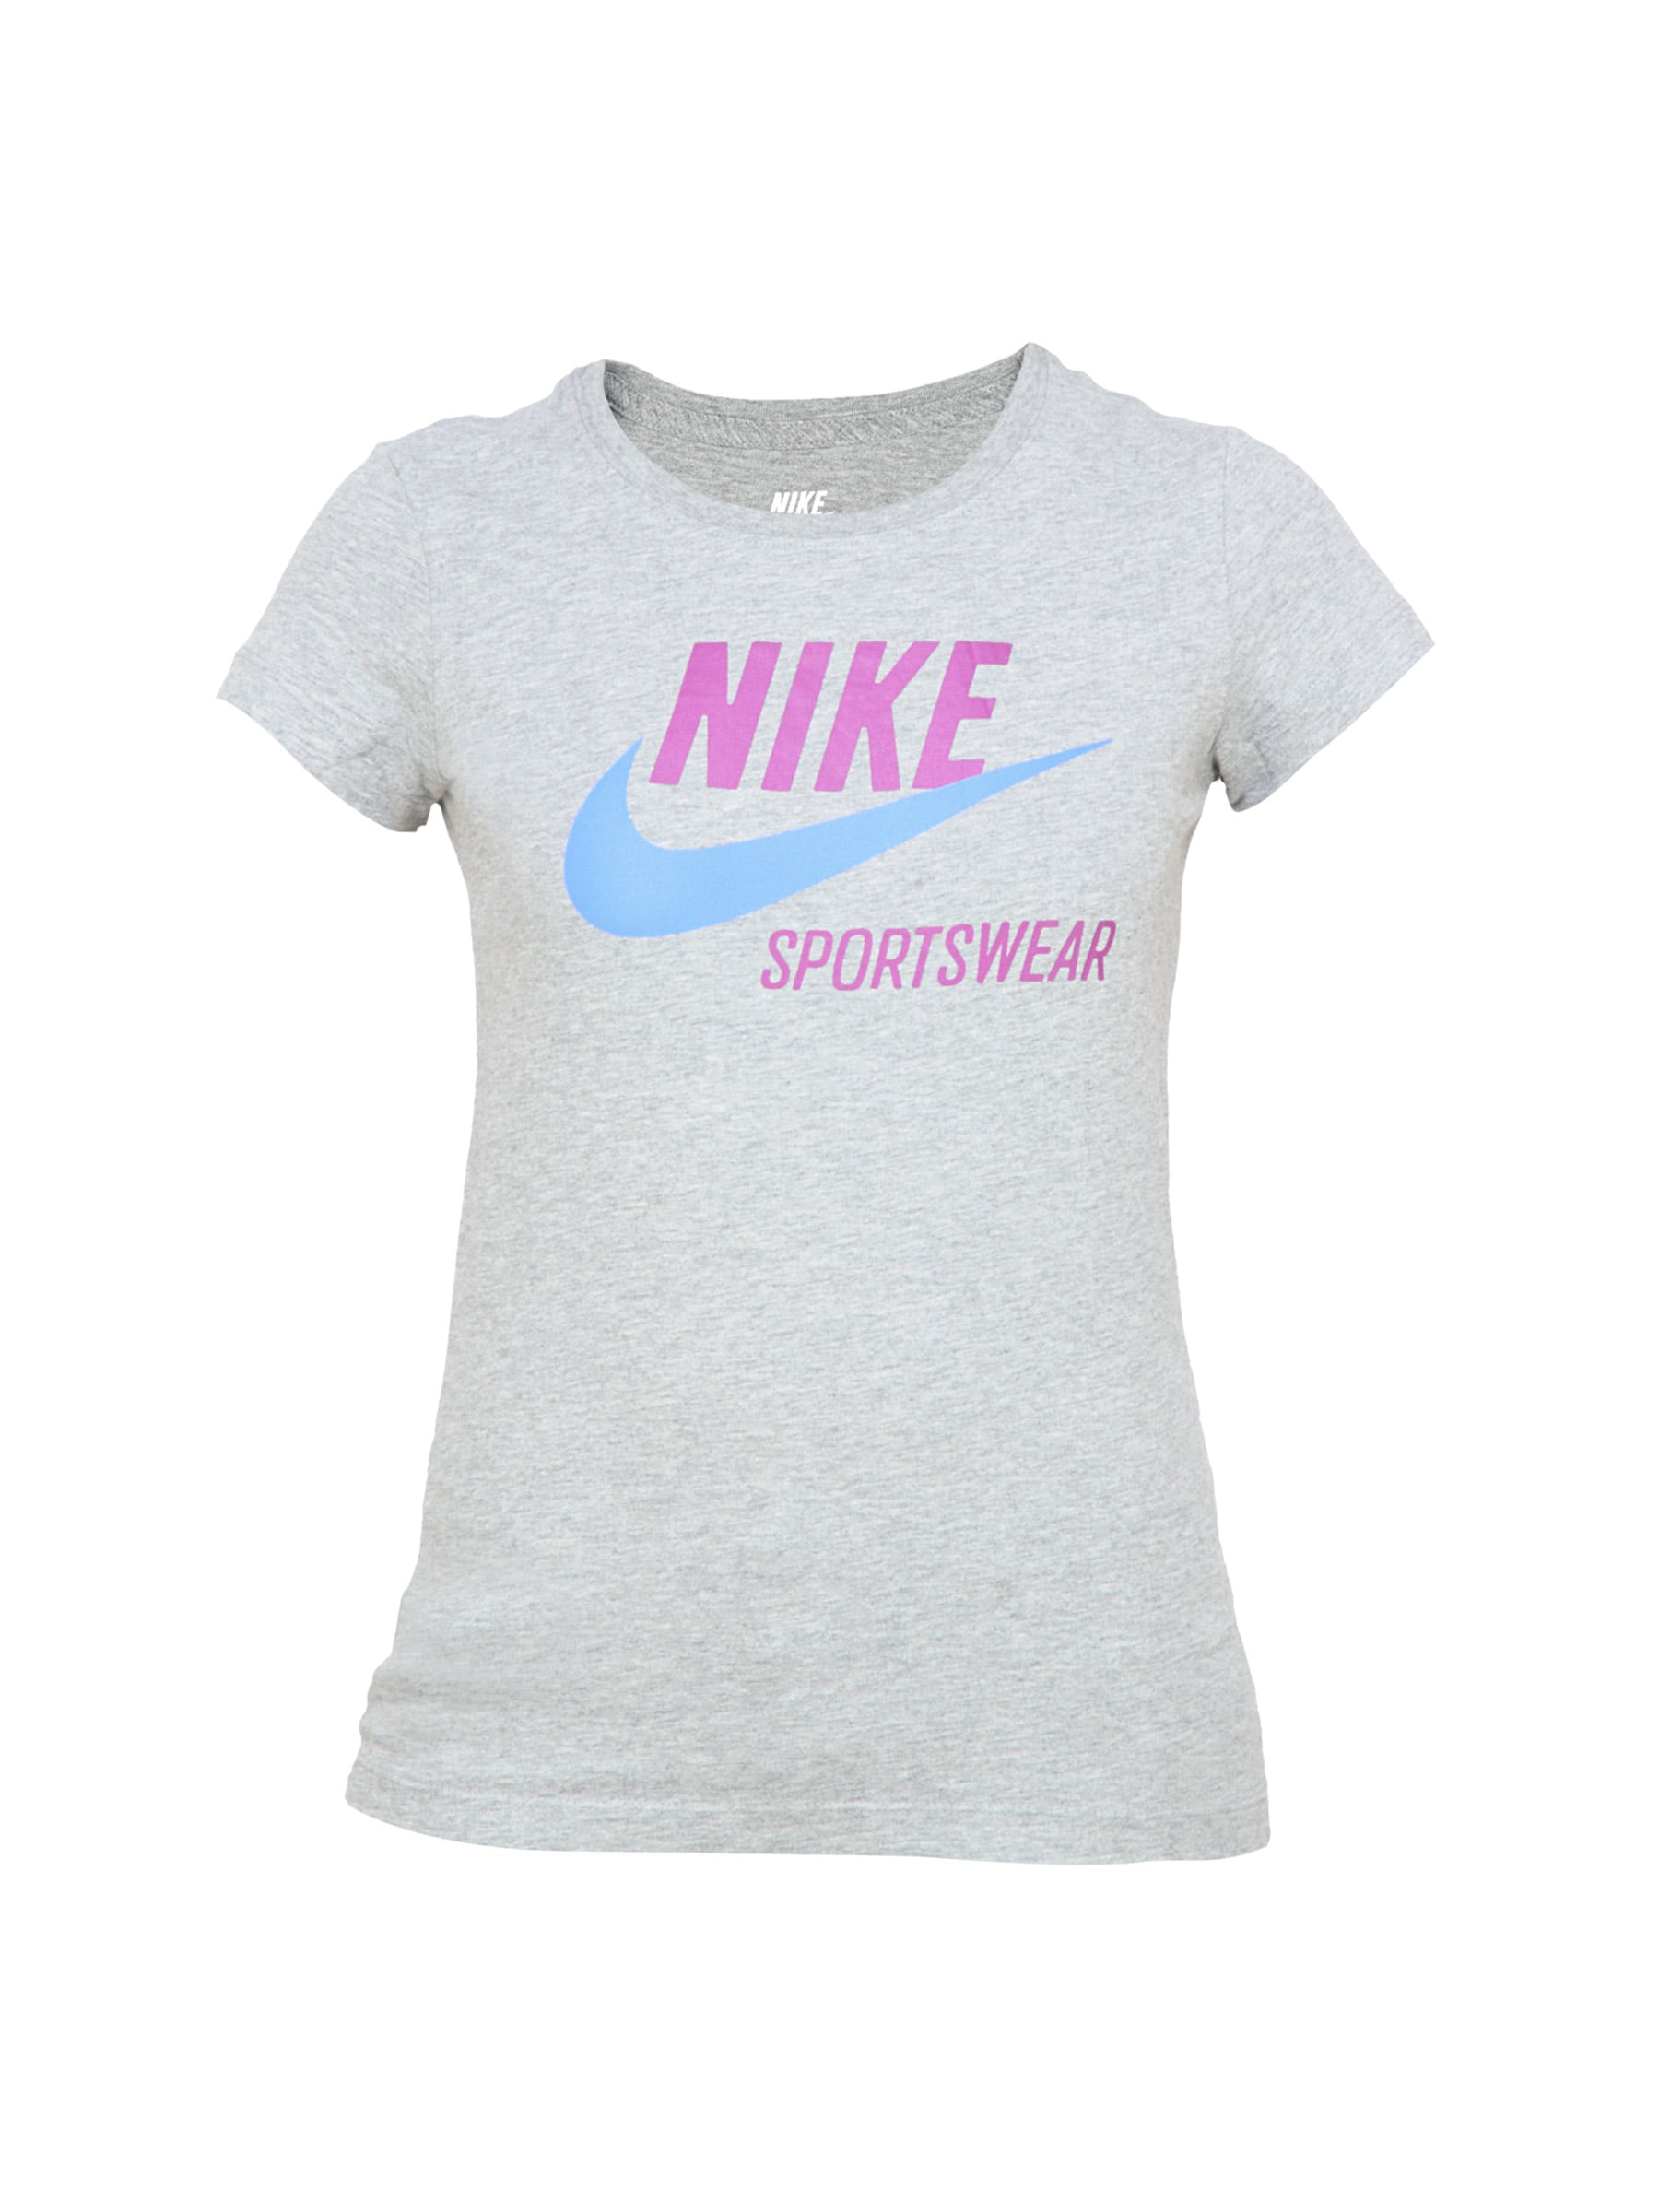 Nike Women Printed Grey T-shirt